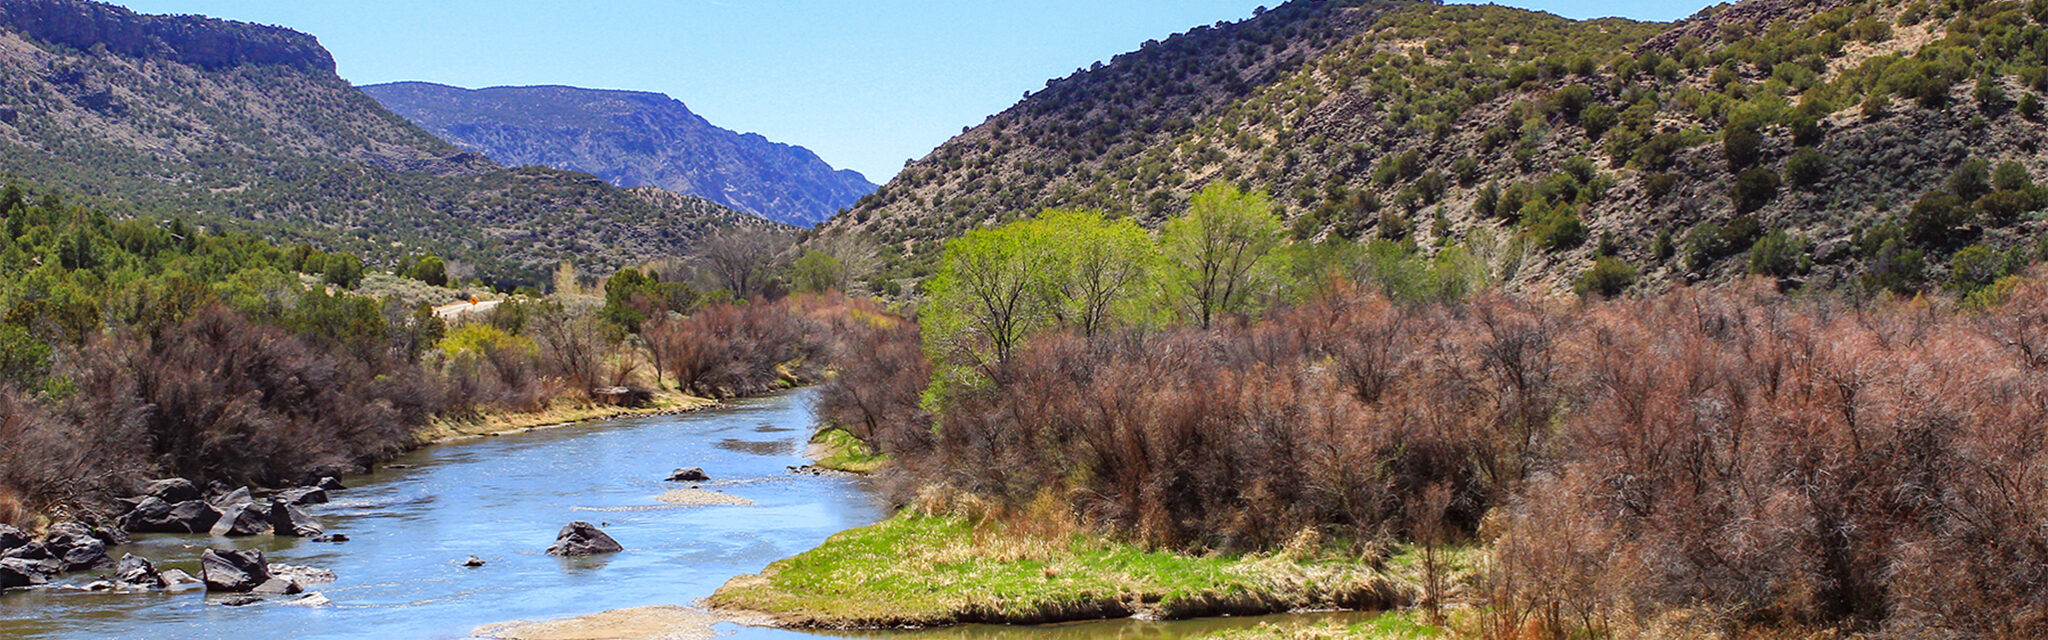 The Rio Grande flows through dramatic southwestern landscape in the springtime.